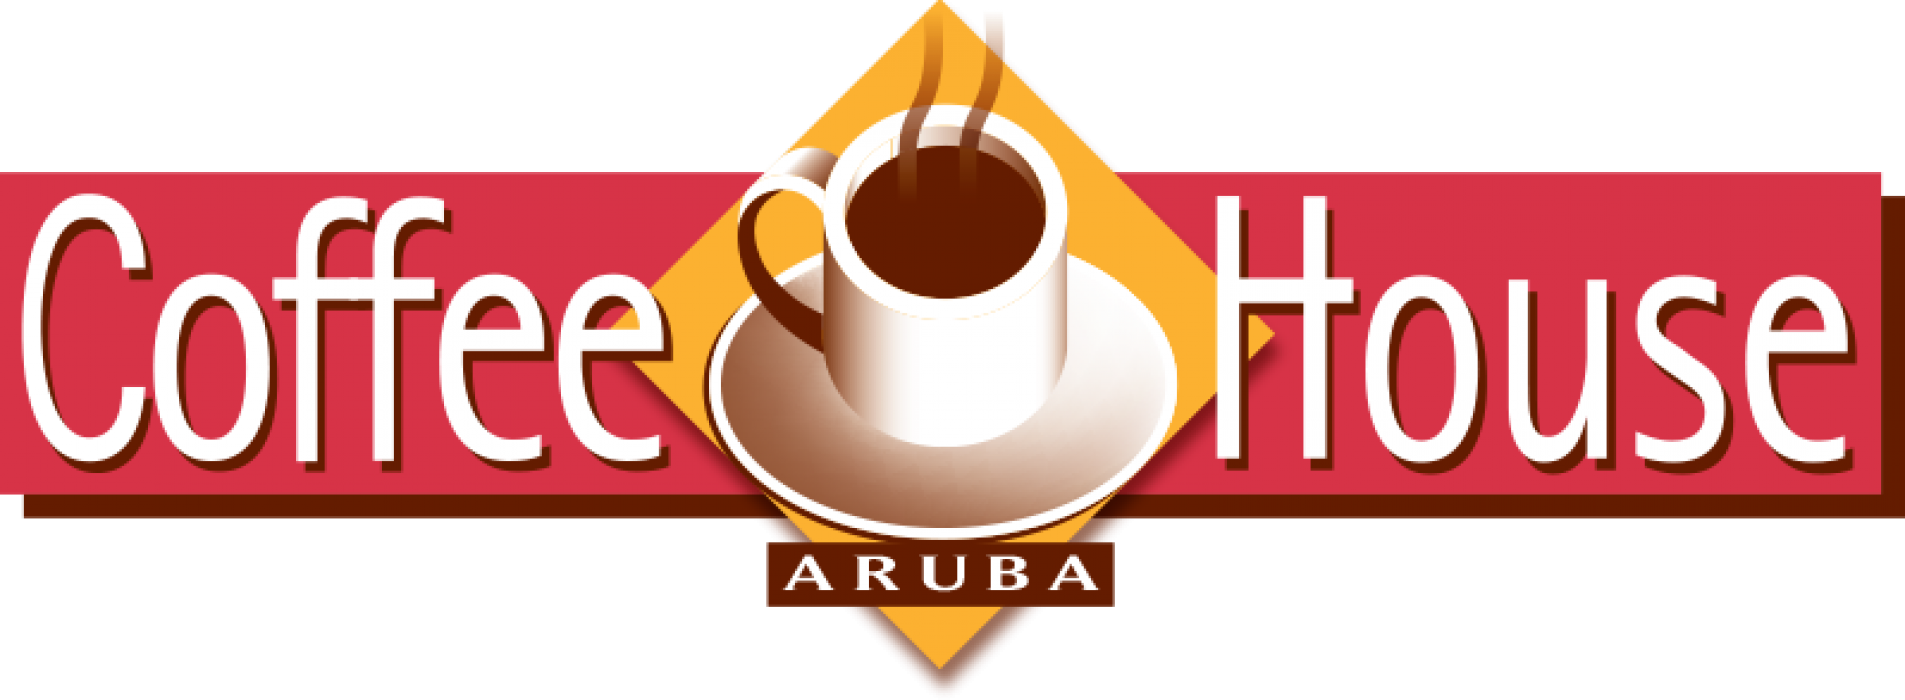 coffeehousearuba-logo.png